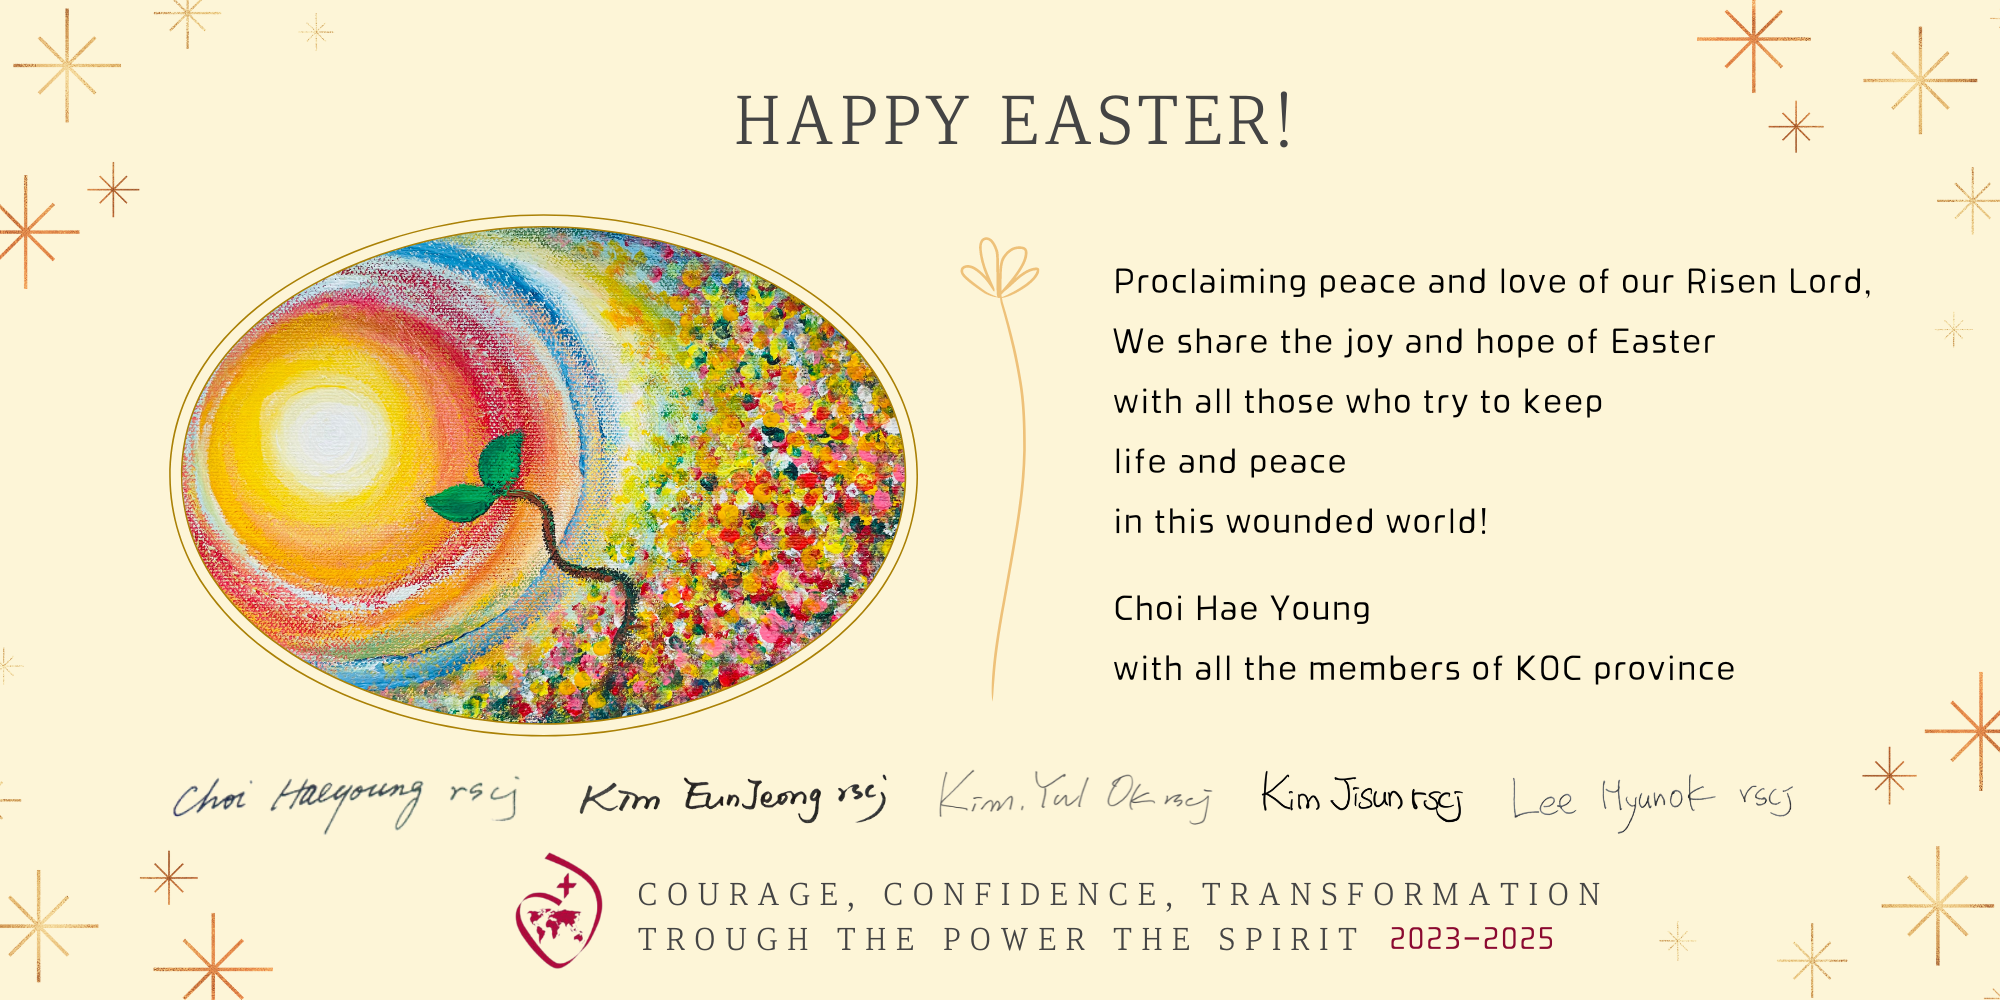 Easter greetings from KOC